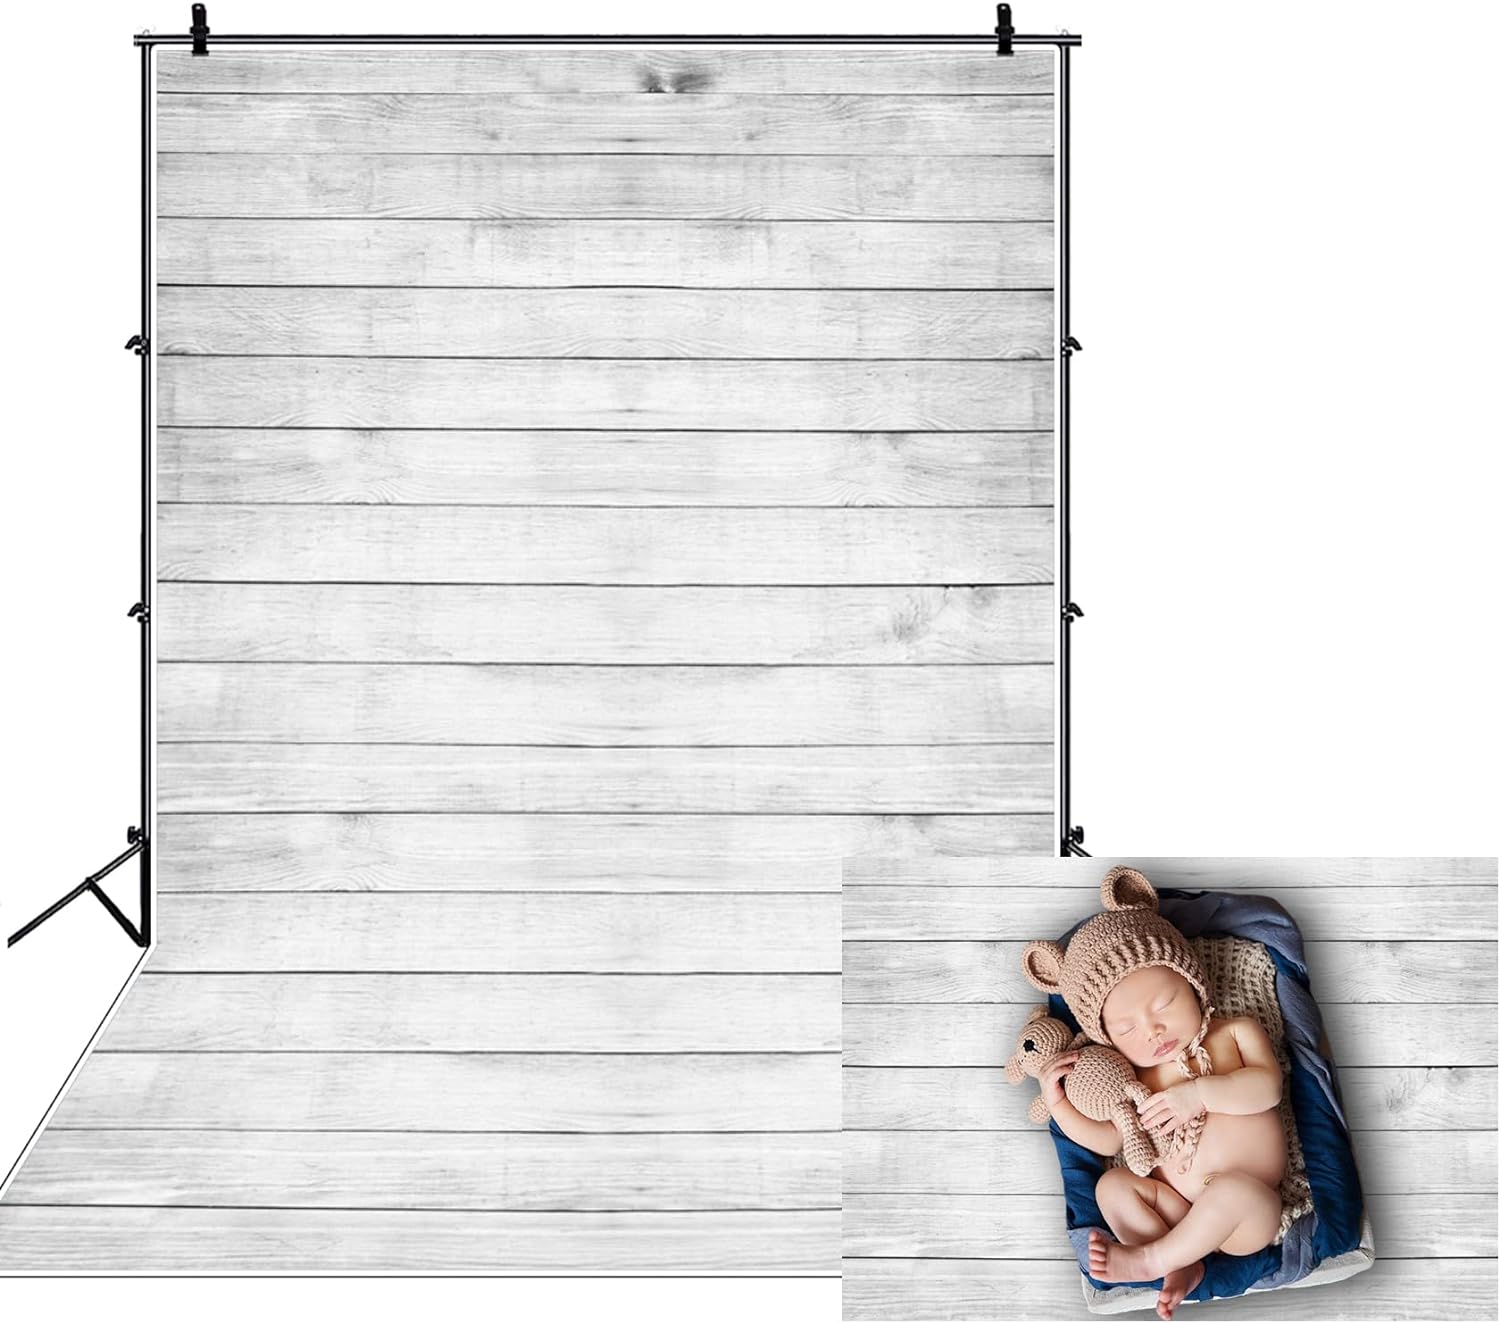 AOFOTO 3x5ft Vintage Wooden Board Background Wood Plank Photography Backdrop Hardwood Fence Panels Kid Baby Boy Girl Artistic Portrait Photoshoot Studio Props Video Drape Wallpaper